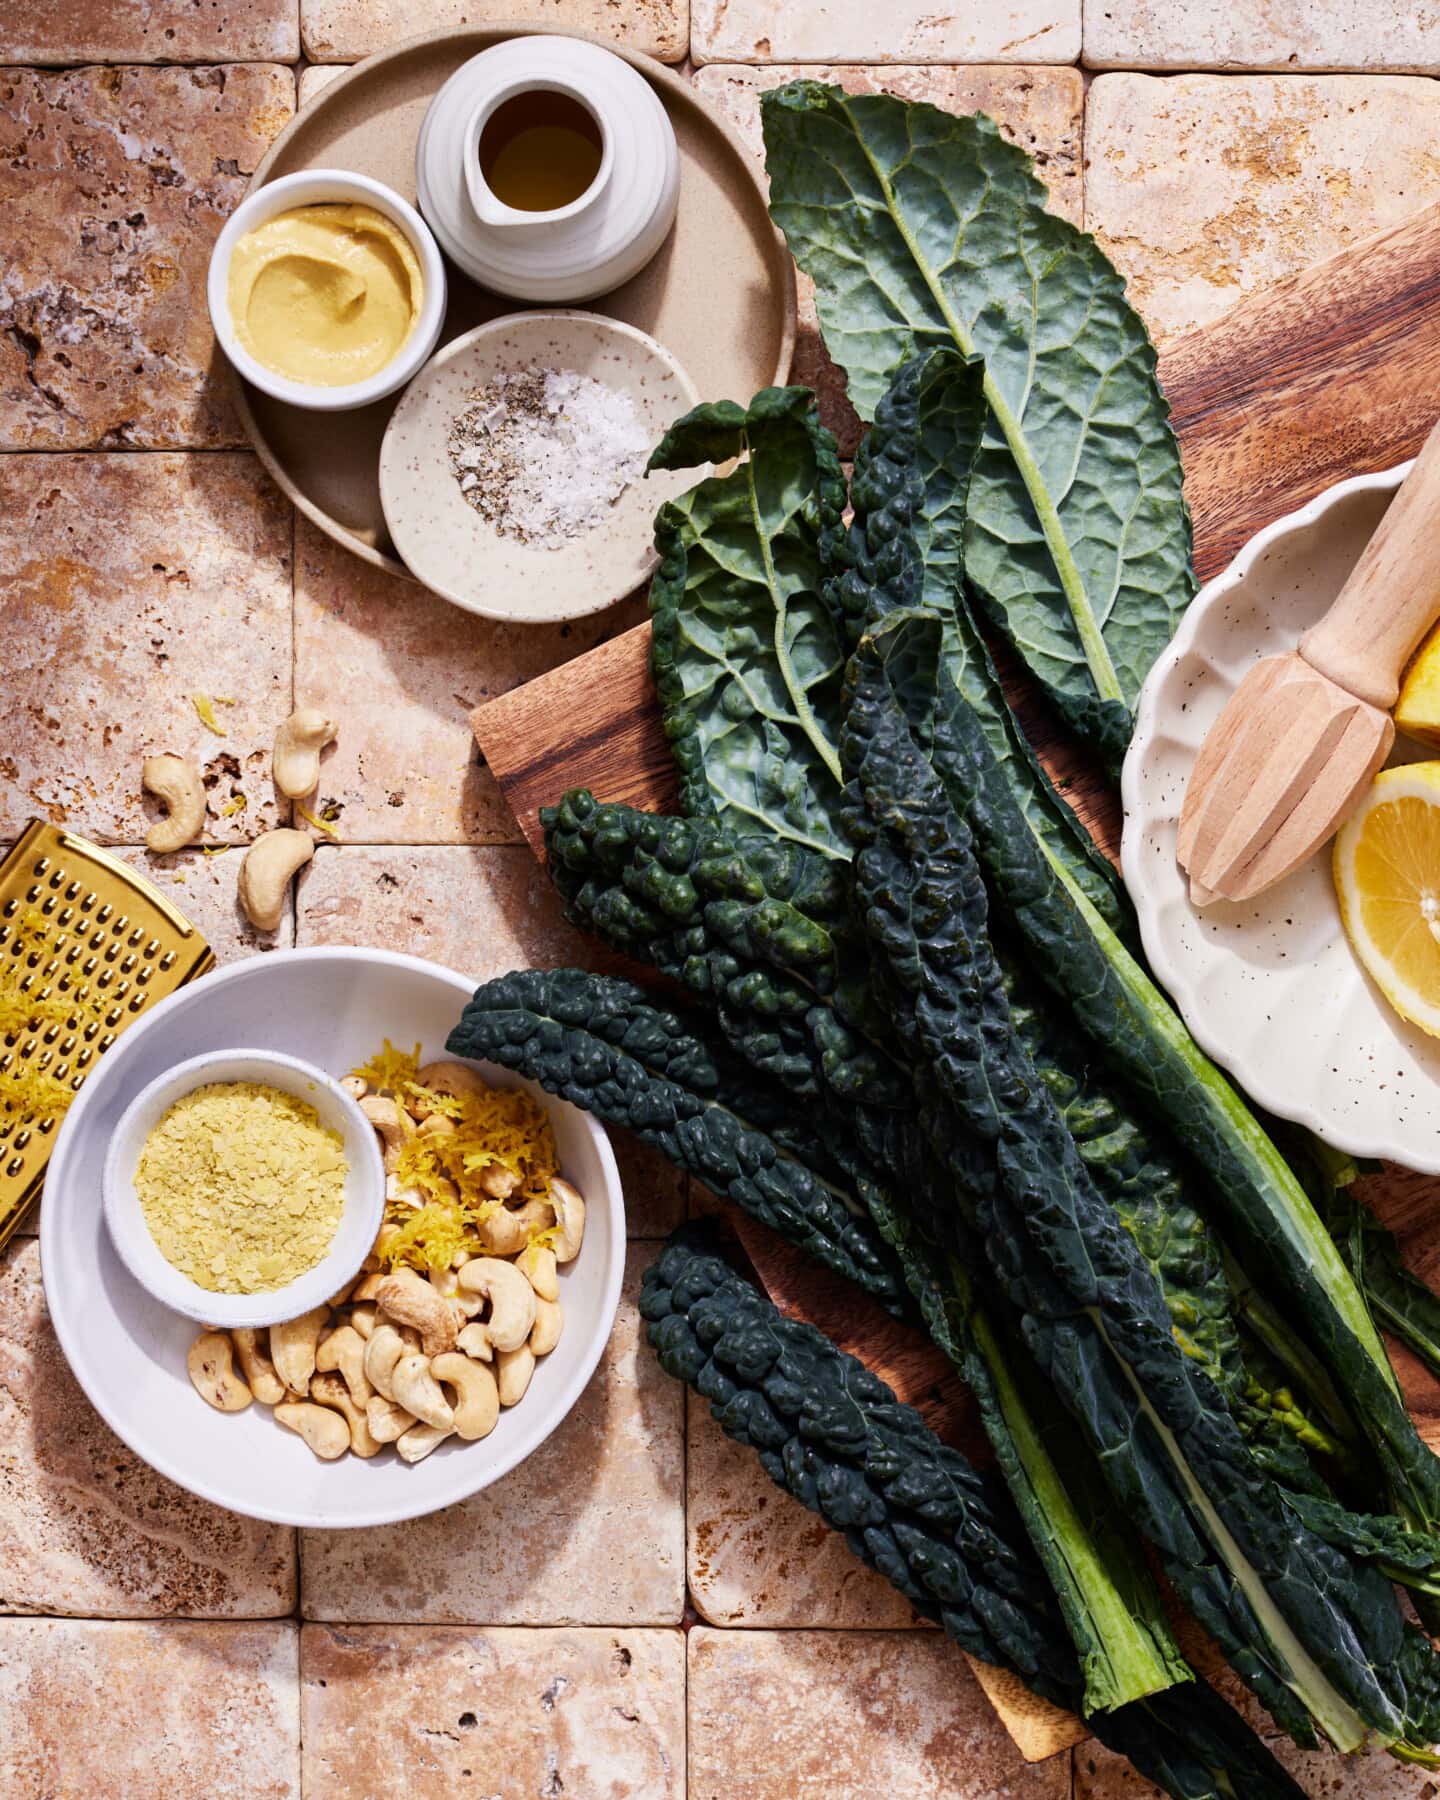 Ingredients for kale salad recipe